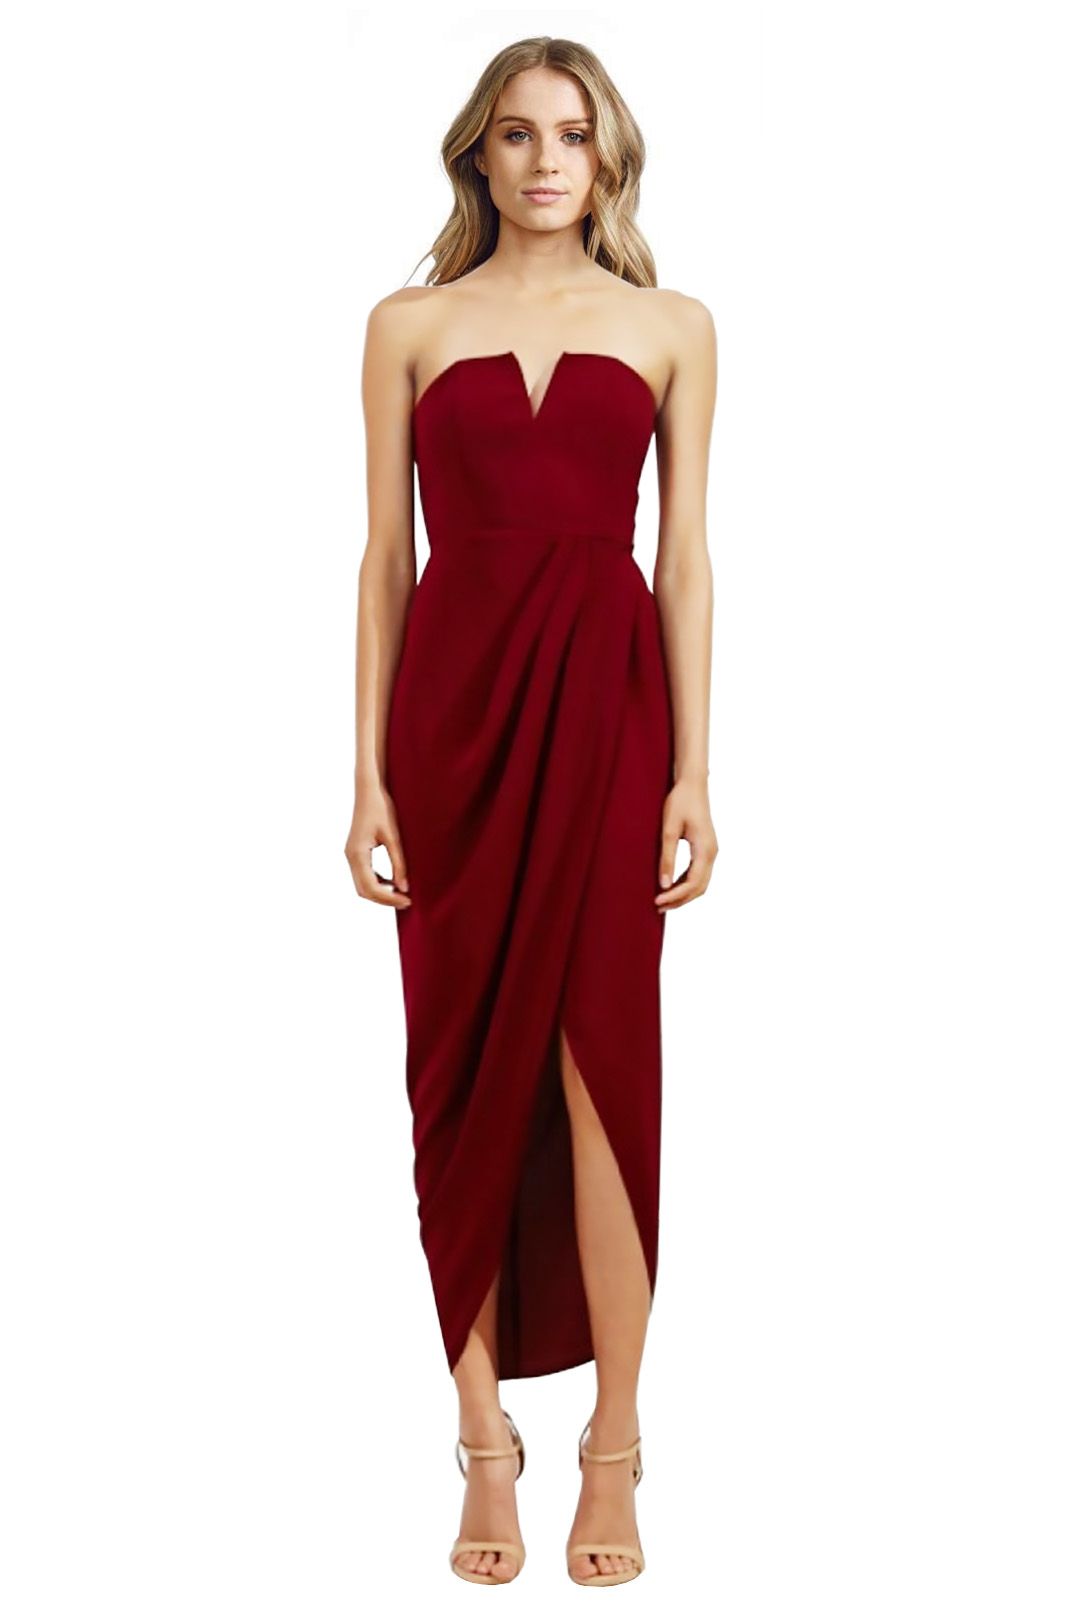 Shona Joy - Core V Bustier Draped Dress